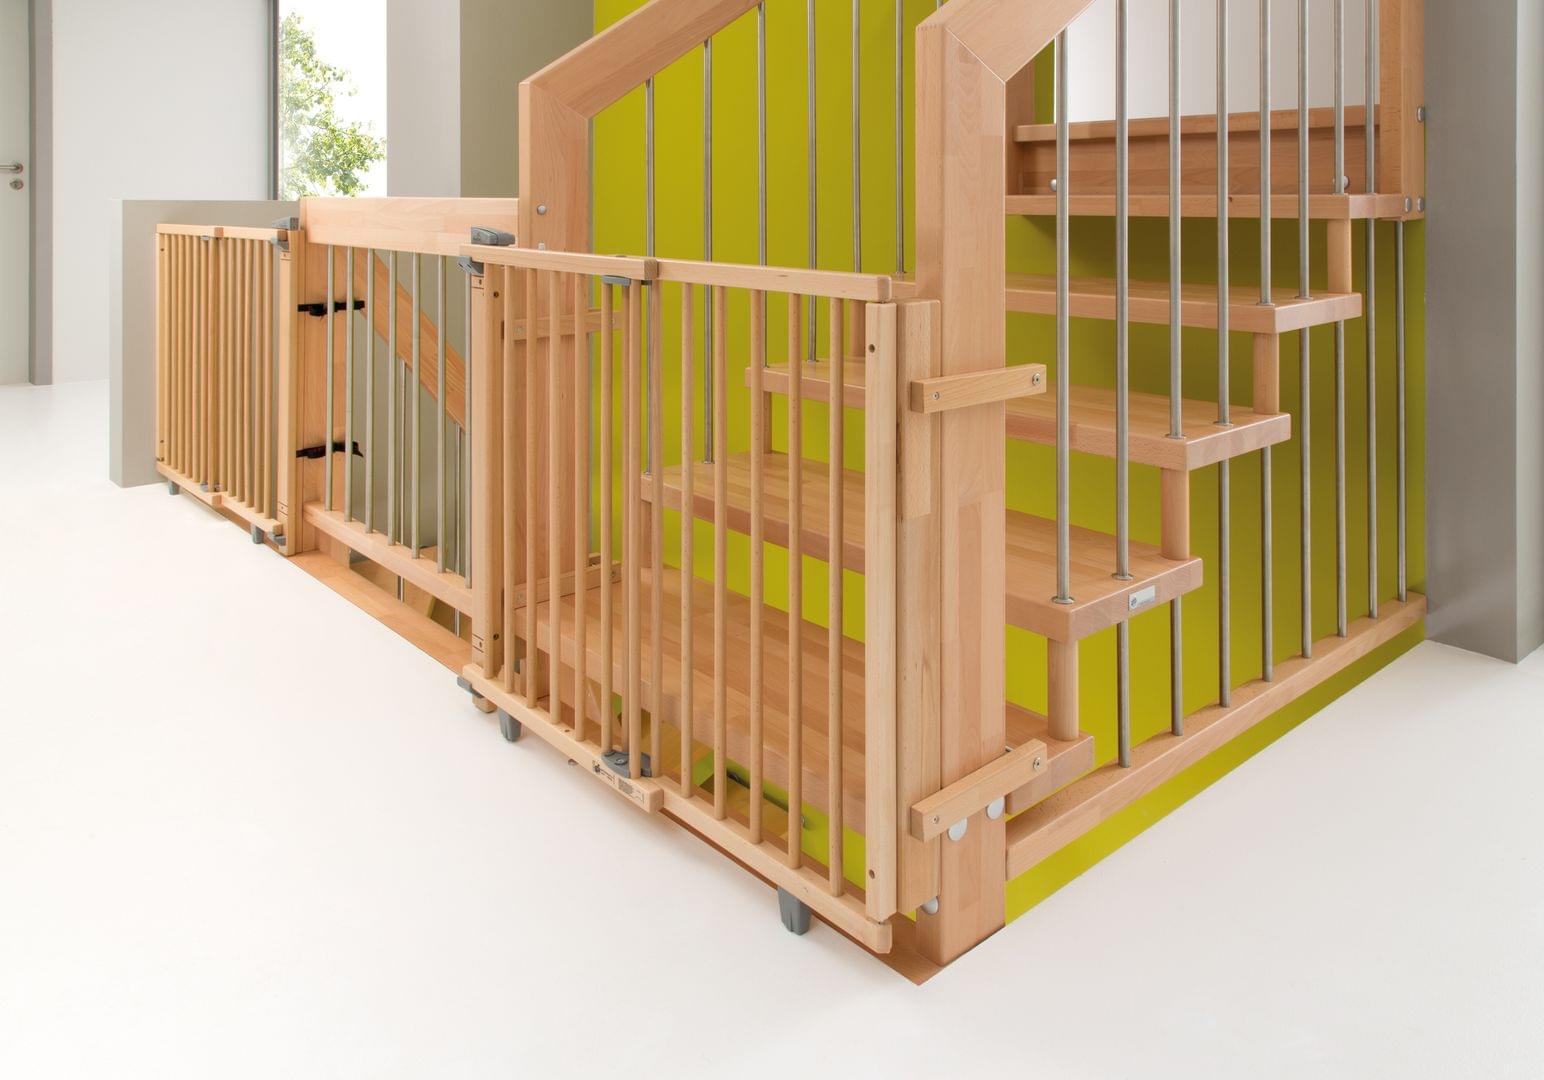 Holztreppe mit Kinderschutz Kinderschutztüre aus Holz